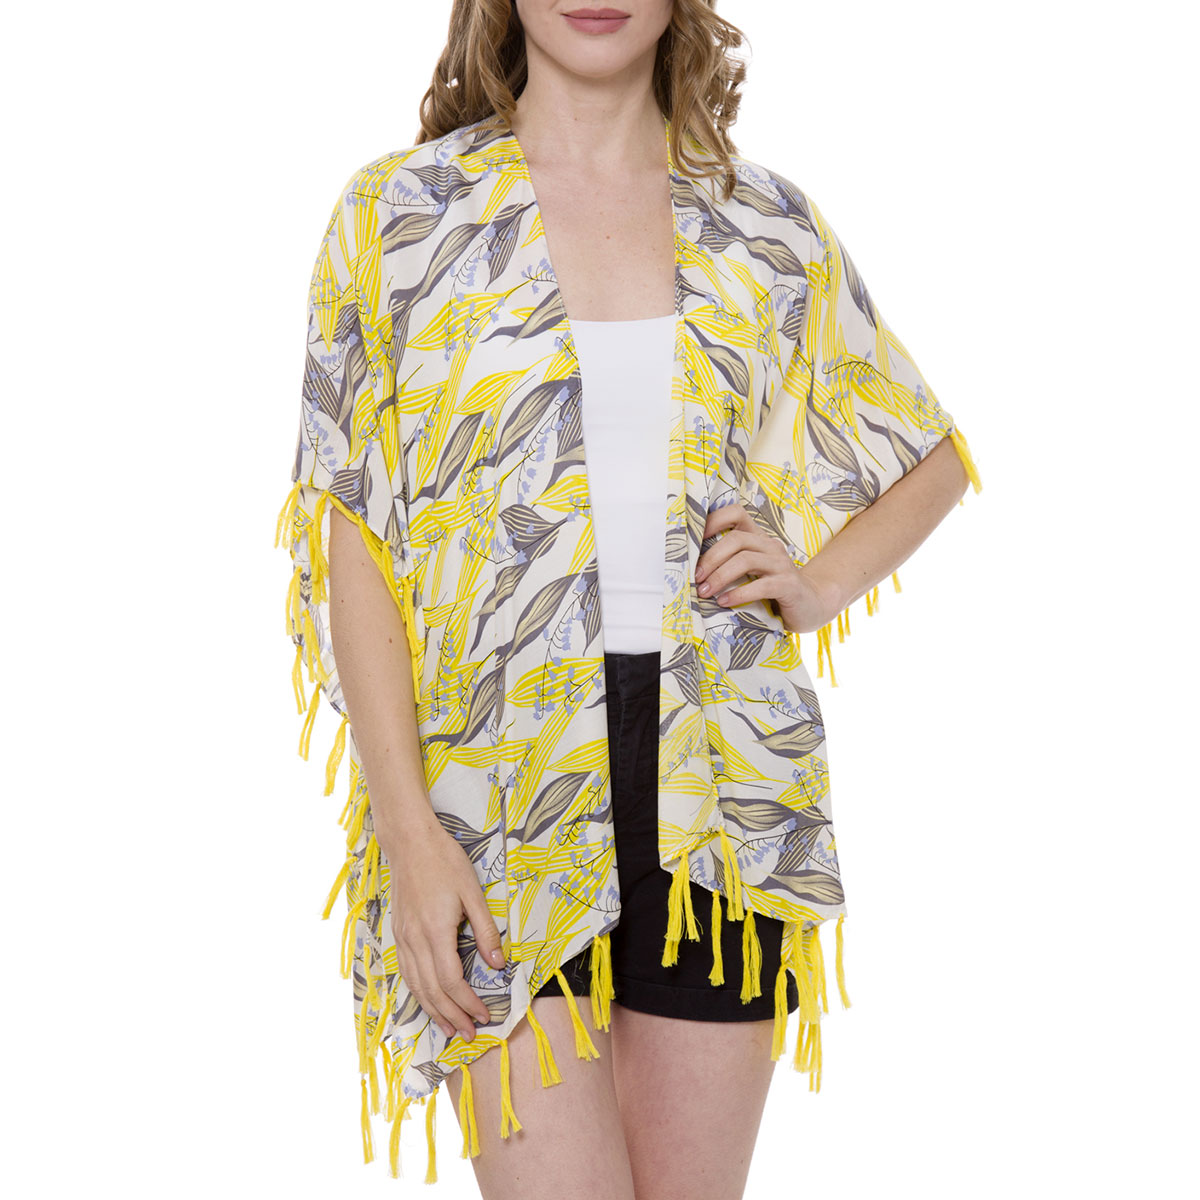 1371 - Yellow<br>
Tasseled Kimono